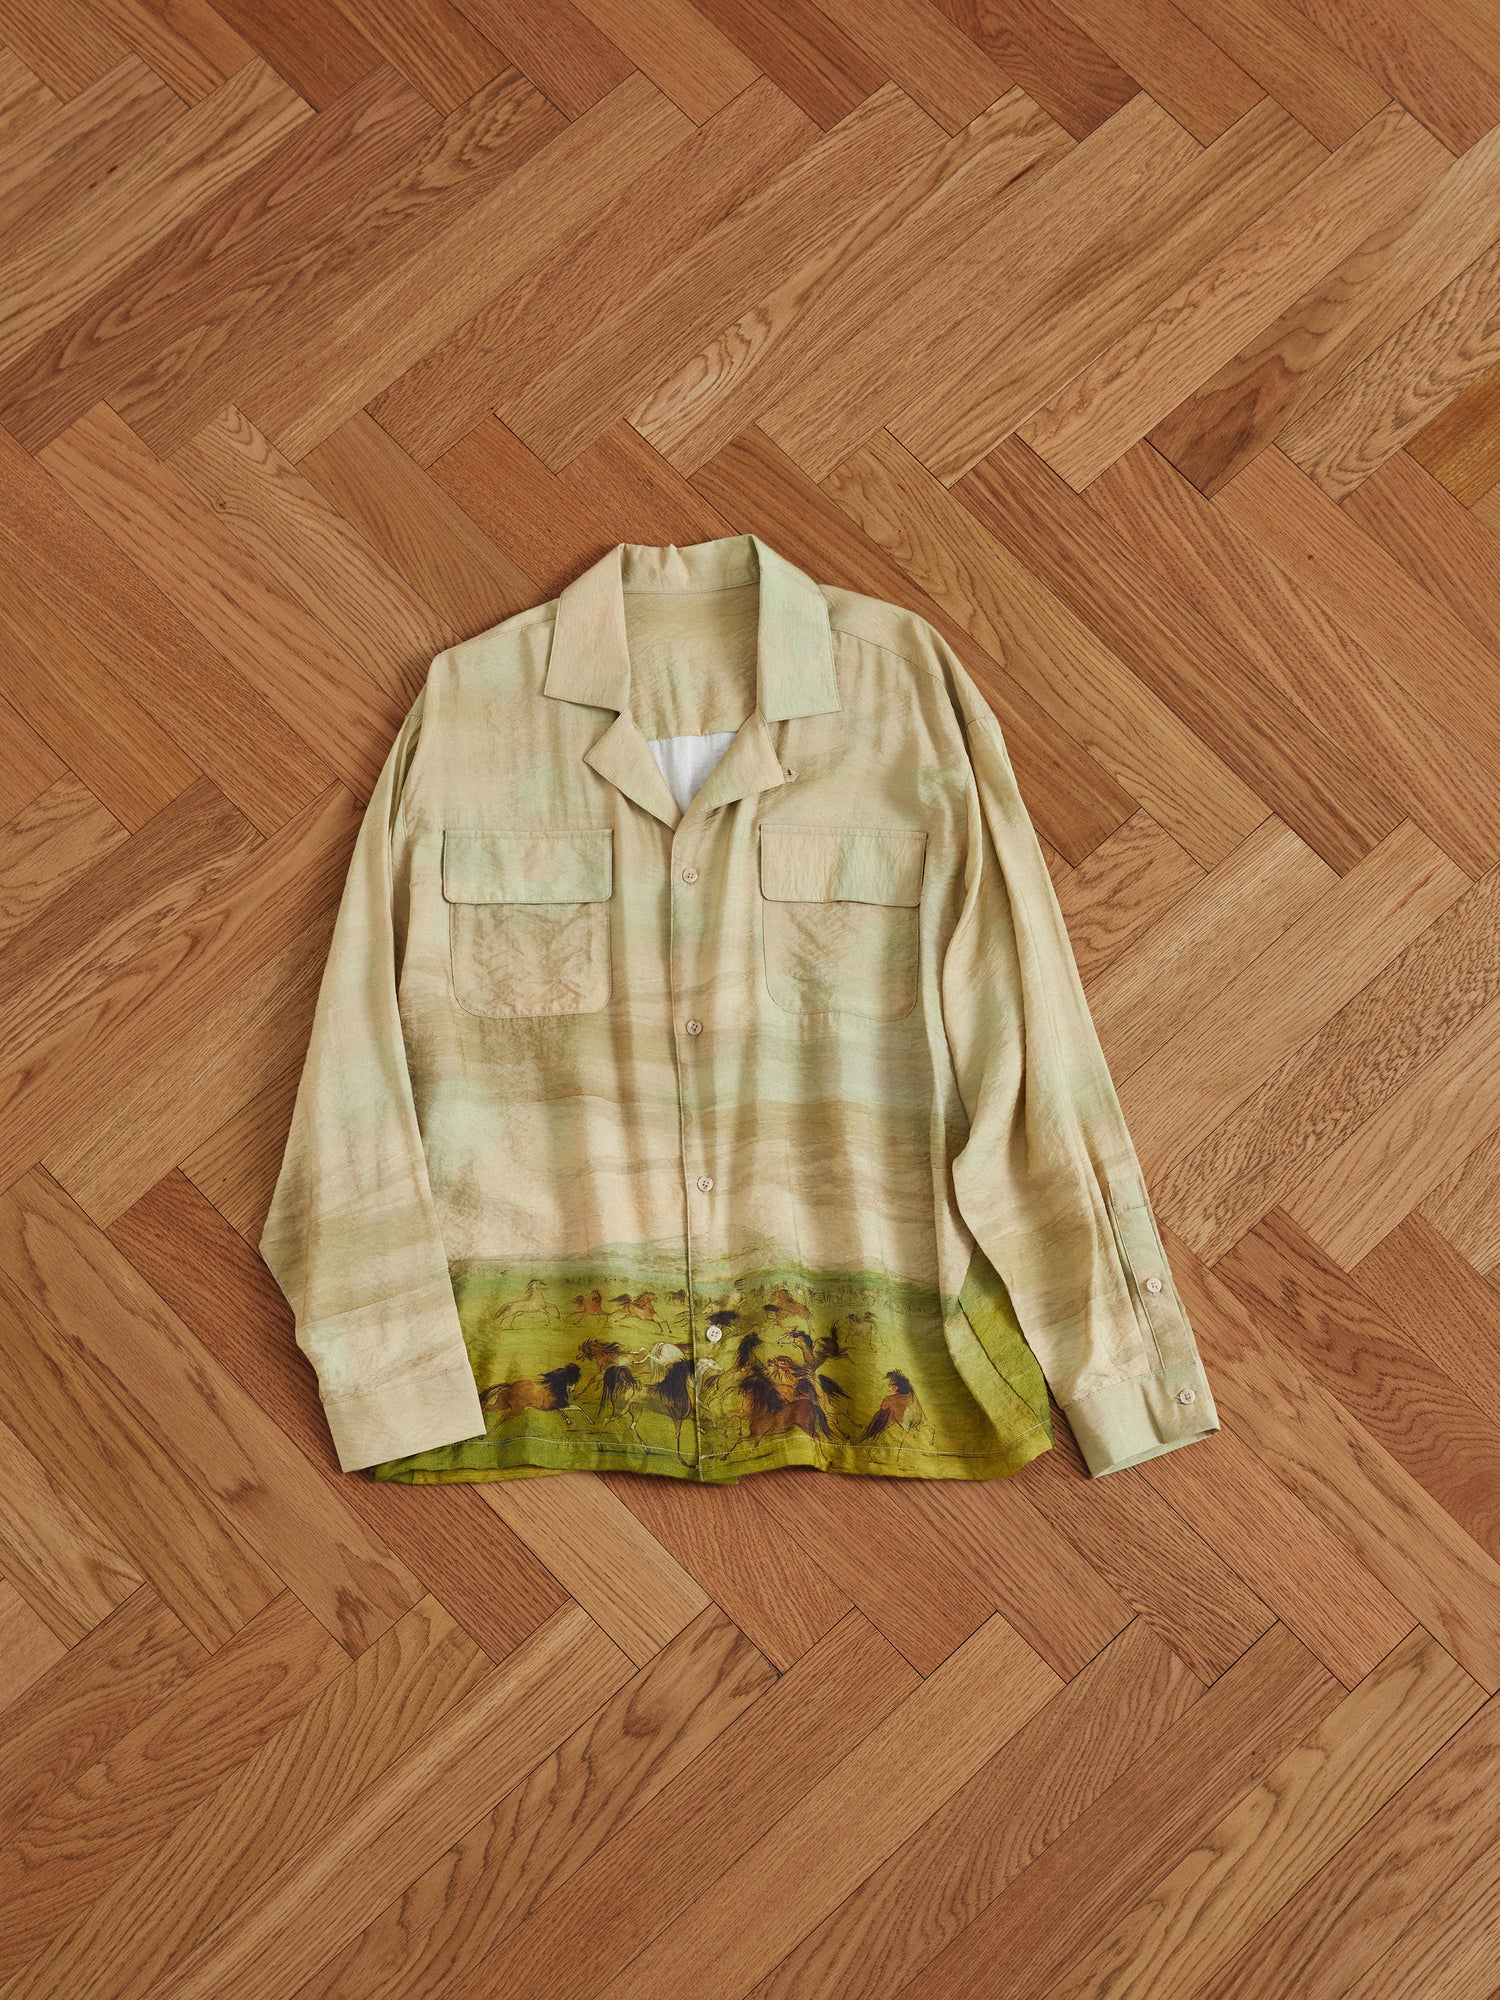 A Grasslands Long Sleeve Camp Shirt with Phulkari motifs on a wooden floor by Found.